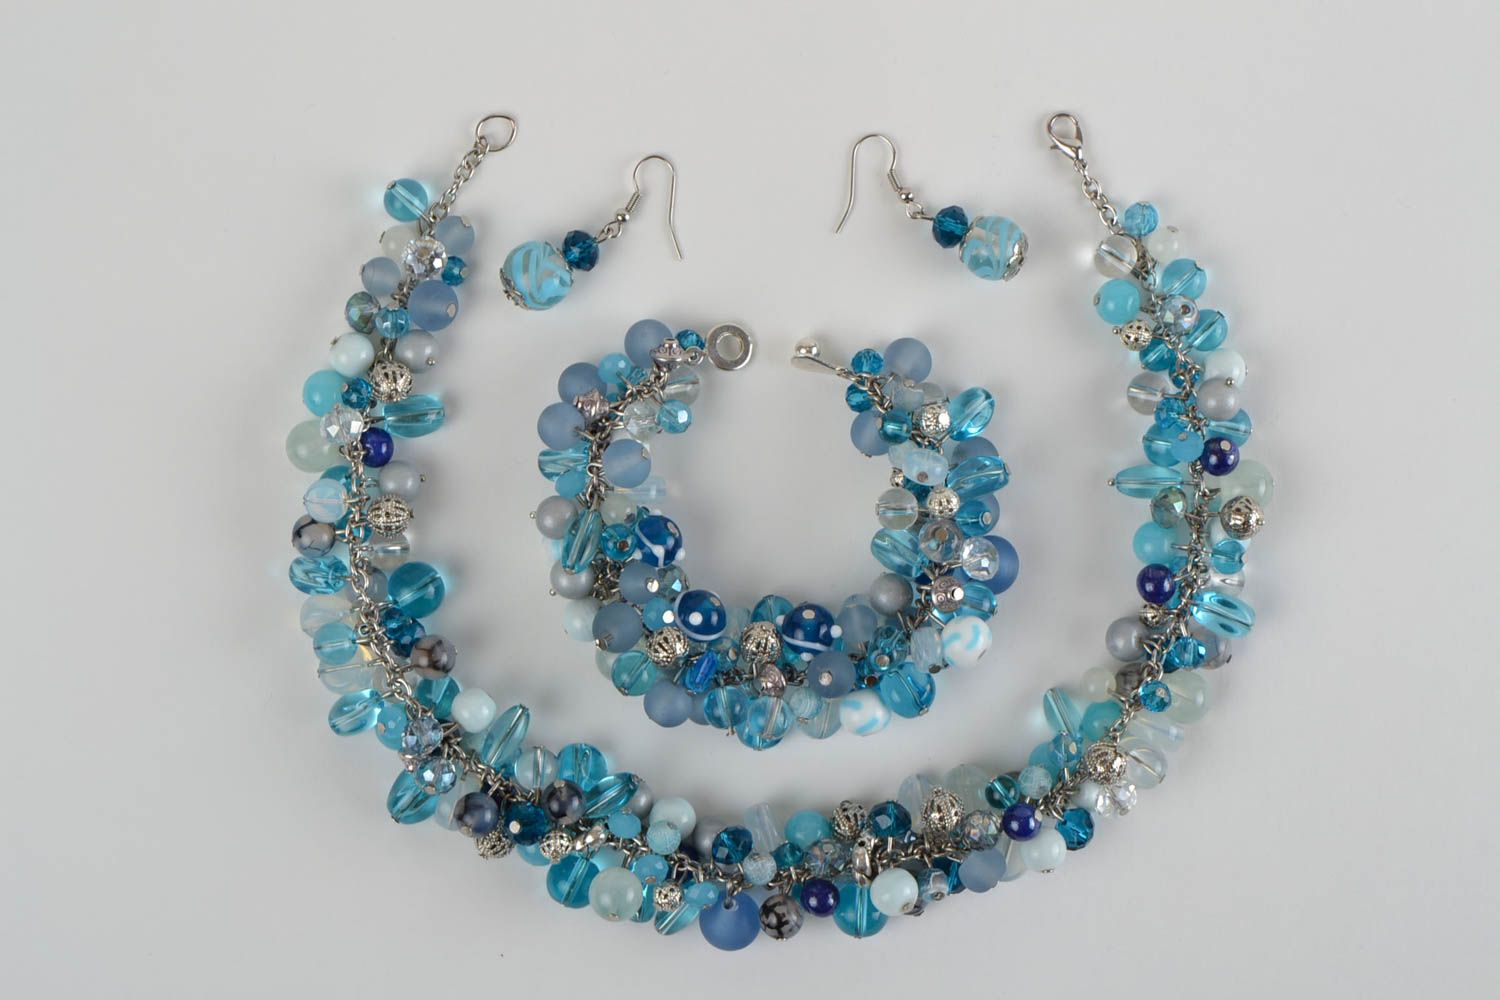 Handmade blue stone and glass bead jewelry set necklace earrings bracelet photo 3